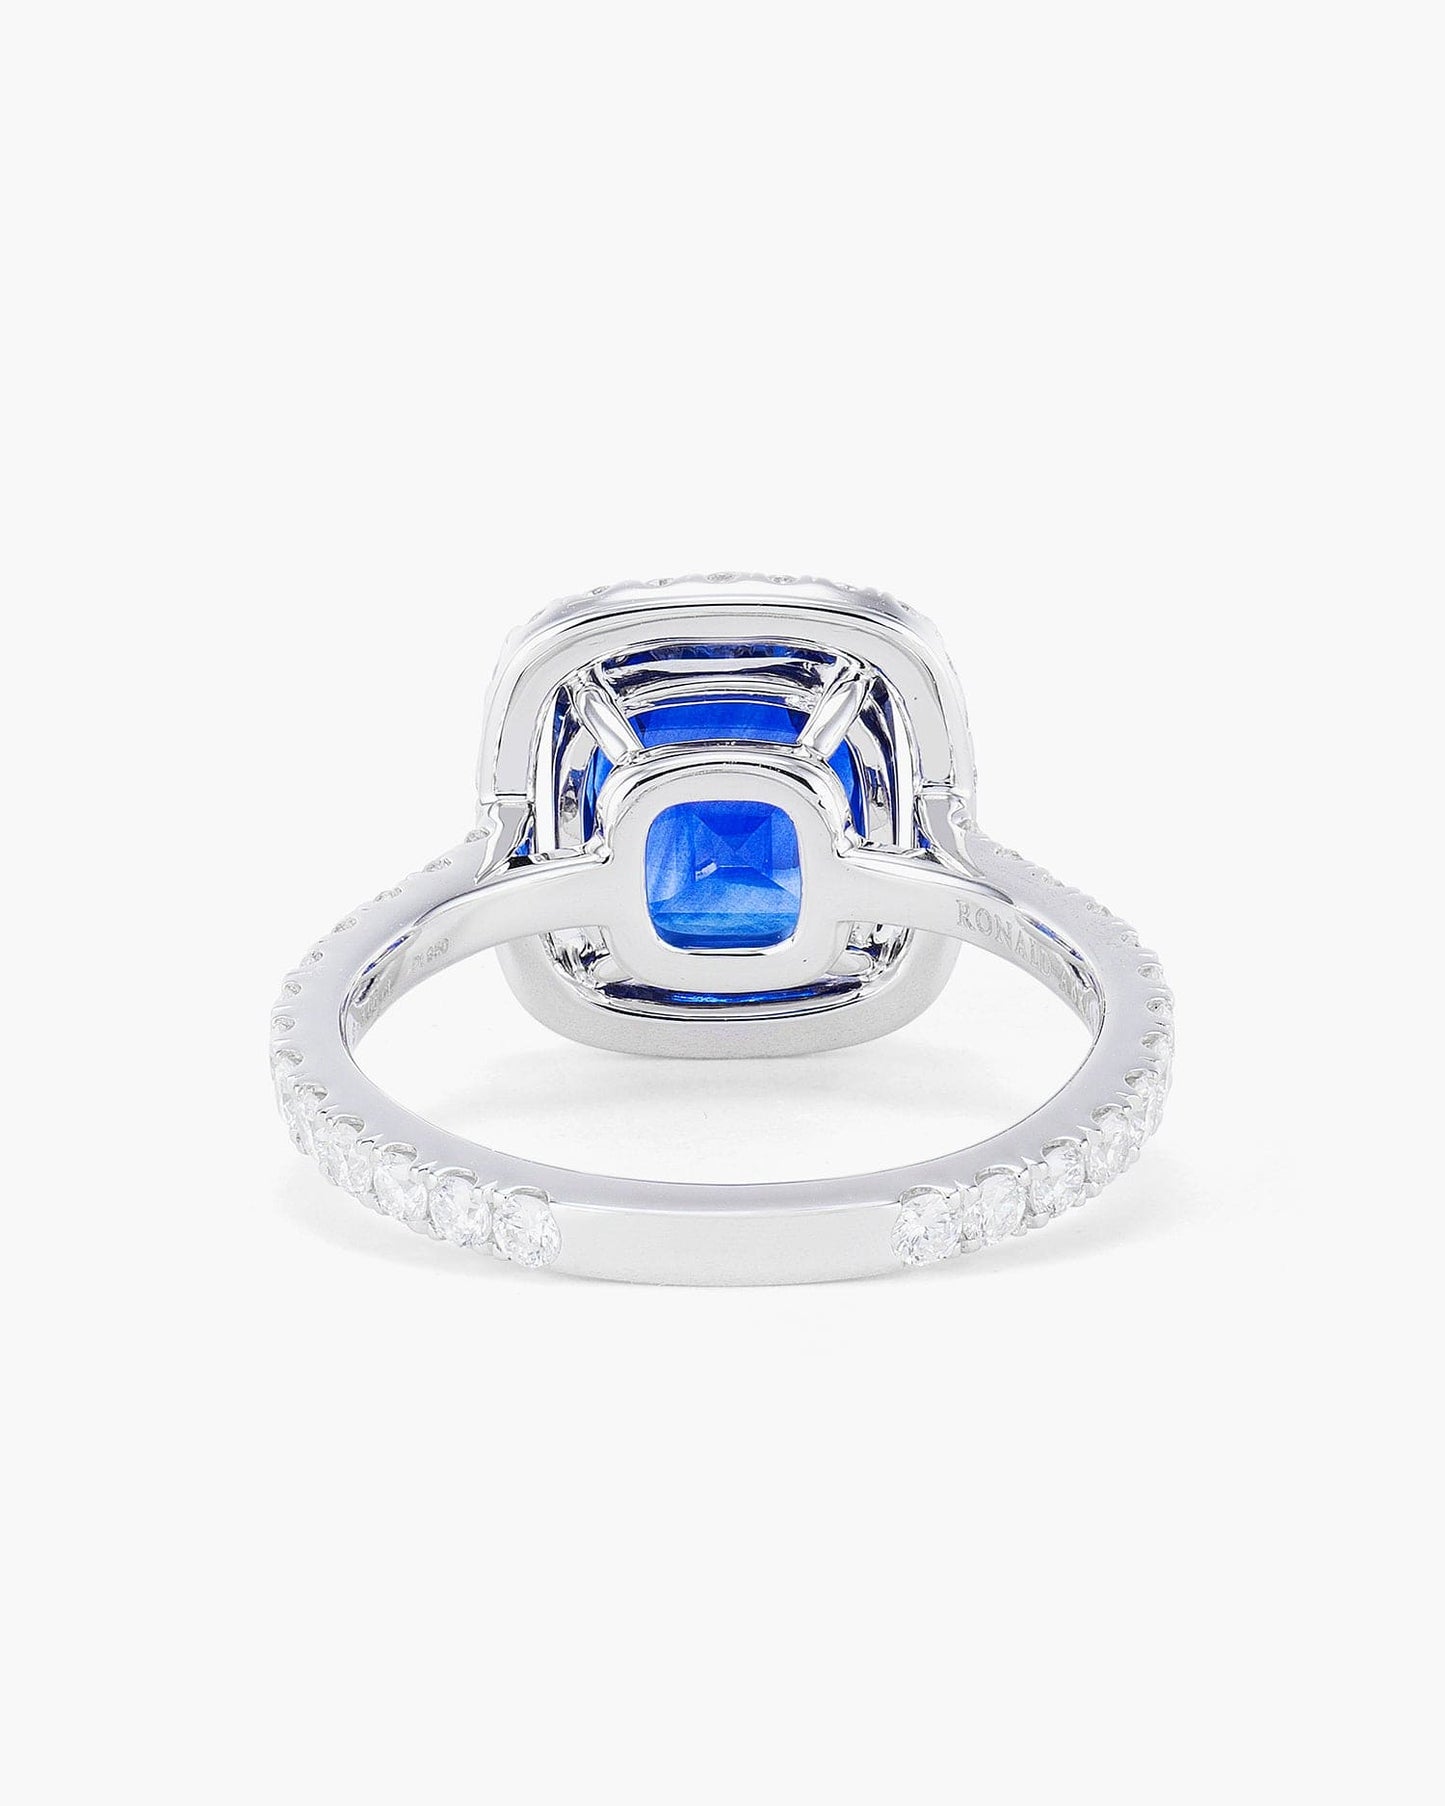 3.06 carat Cushion Cut Ceylon Sapphire and Diamond Ring